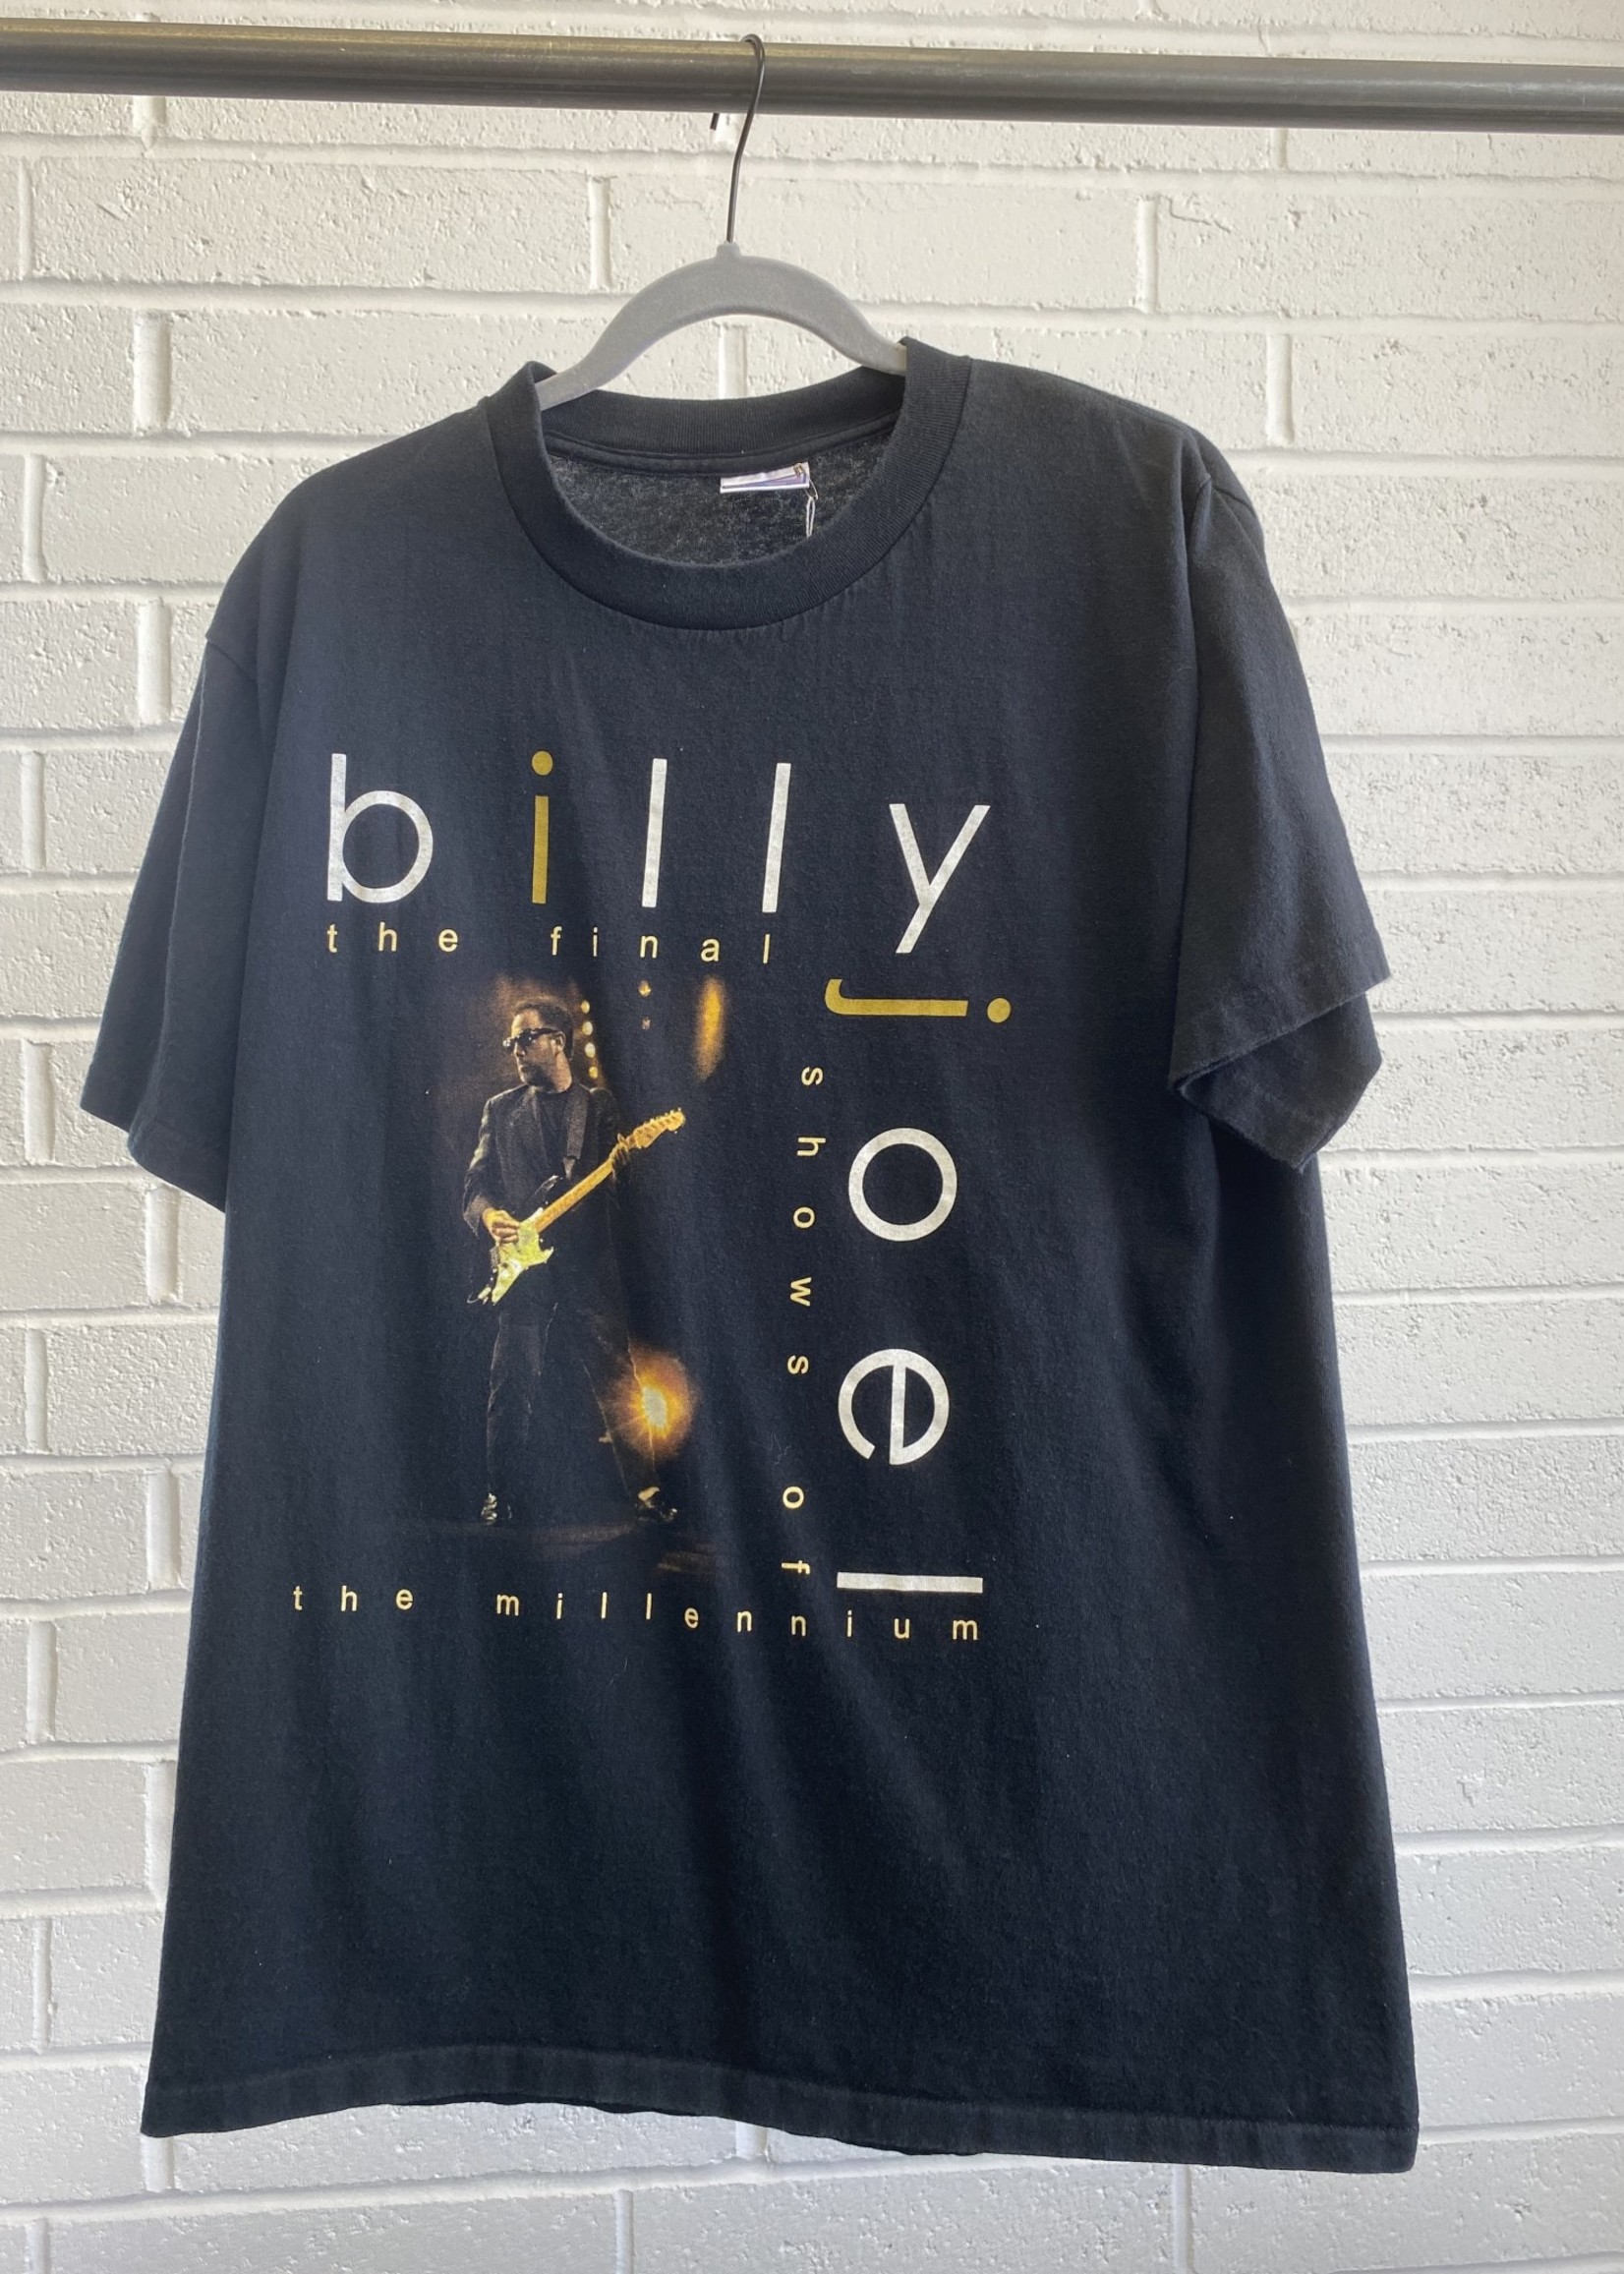 Vintage Billy Joel Tee. Size L.